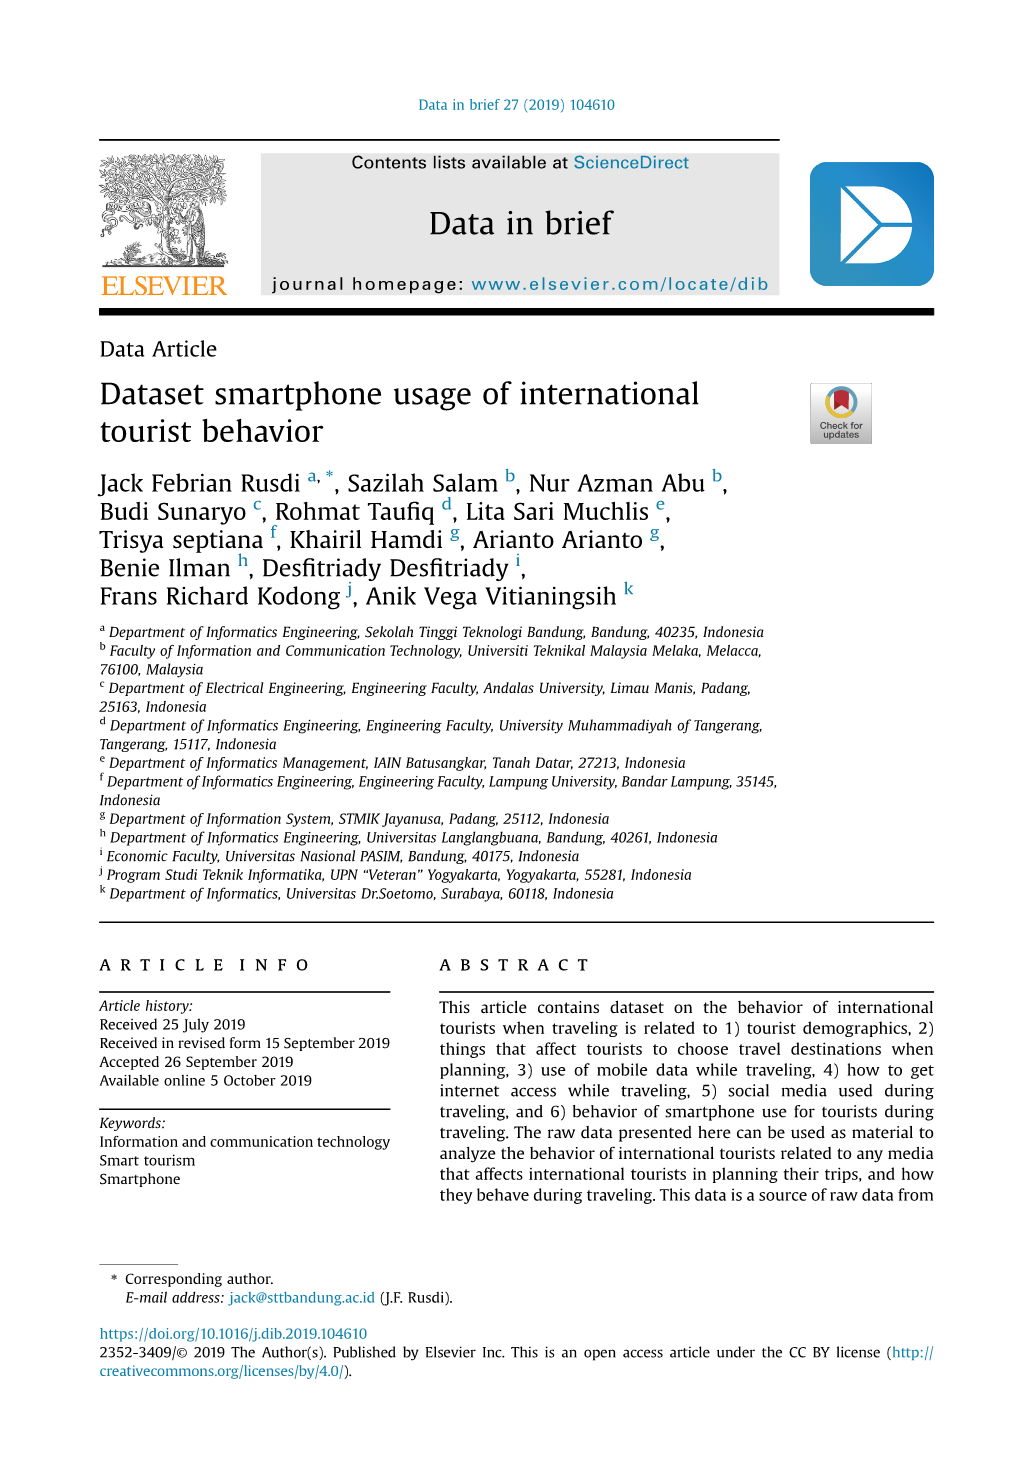 Dataset Smartphone Usage of International Tourist Behavior